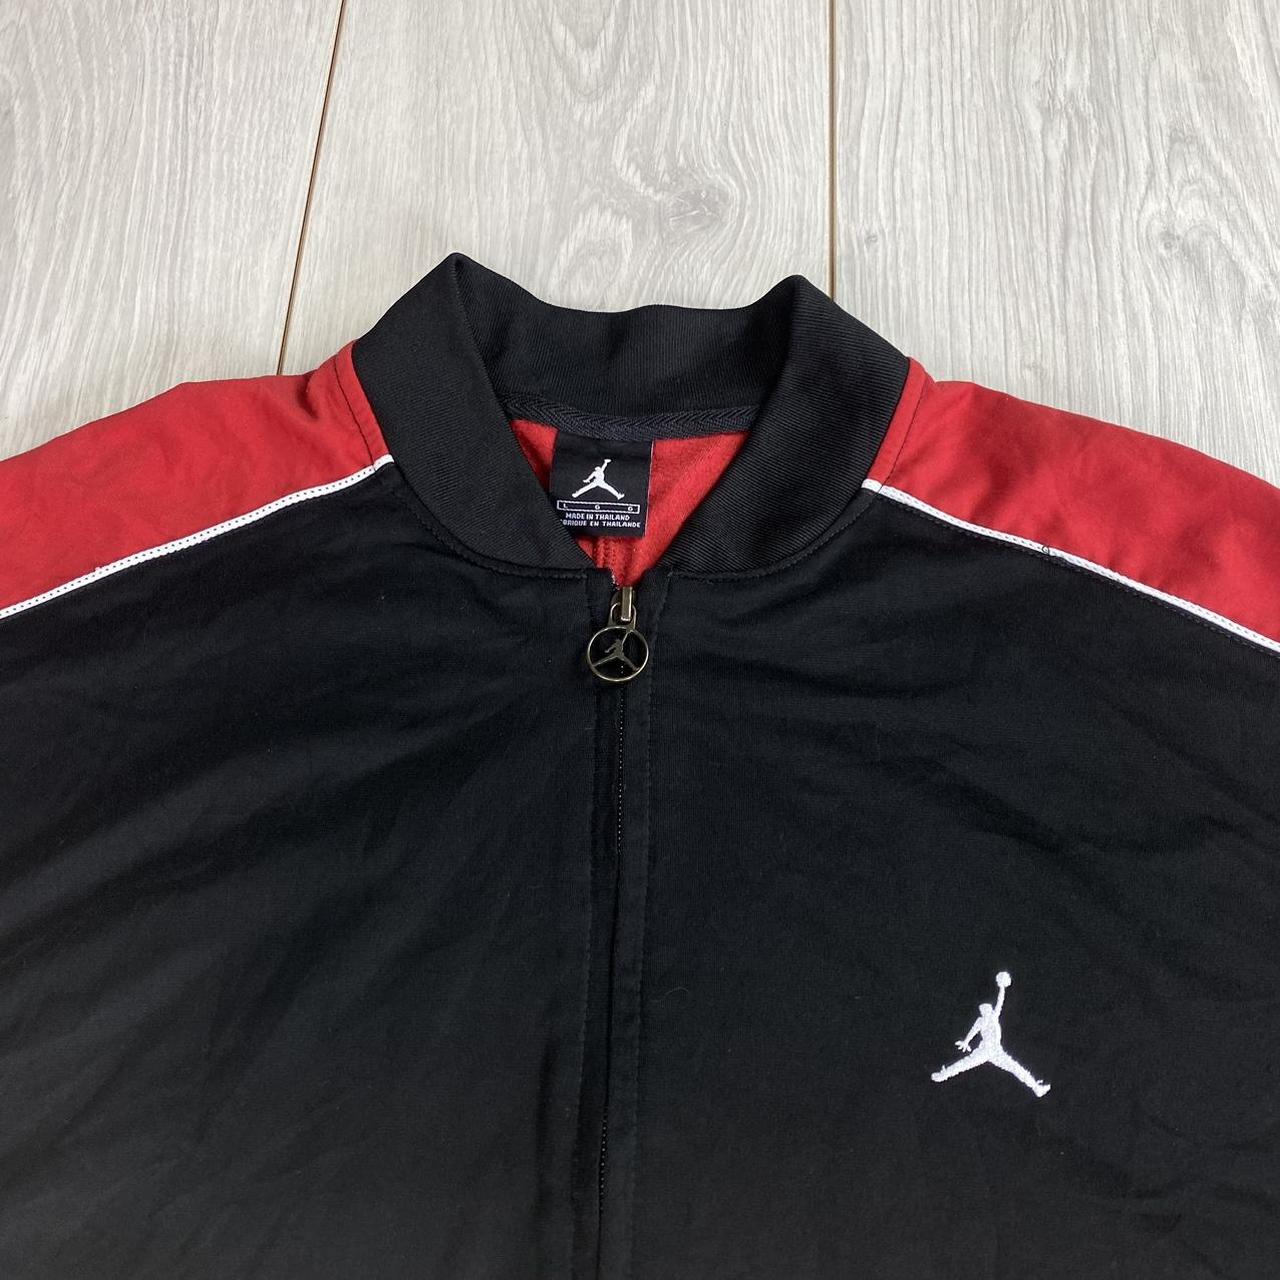 Vintage Nike Jordan Zip-up Black and Red Mens Large... - Depop